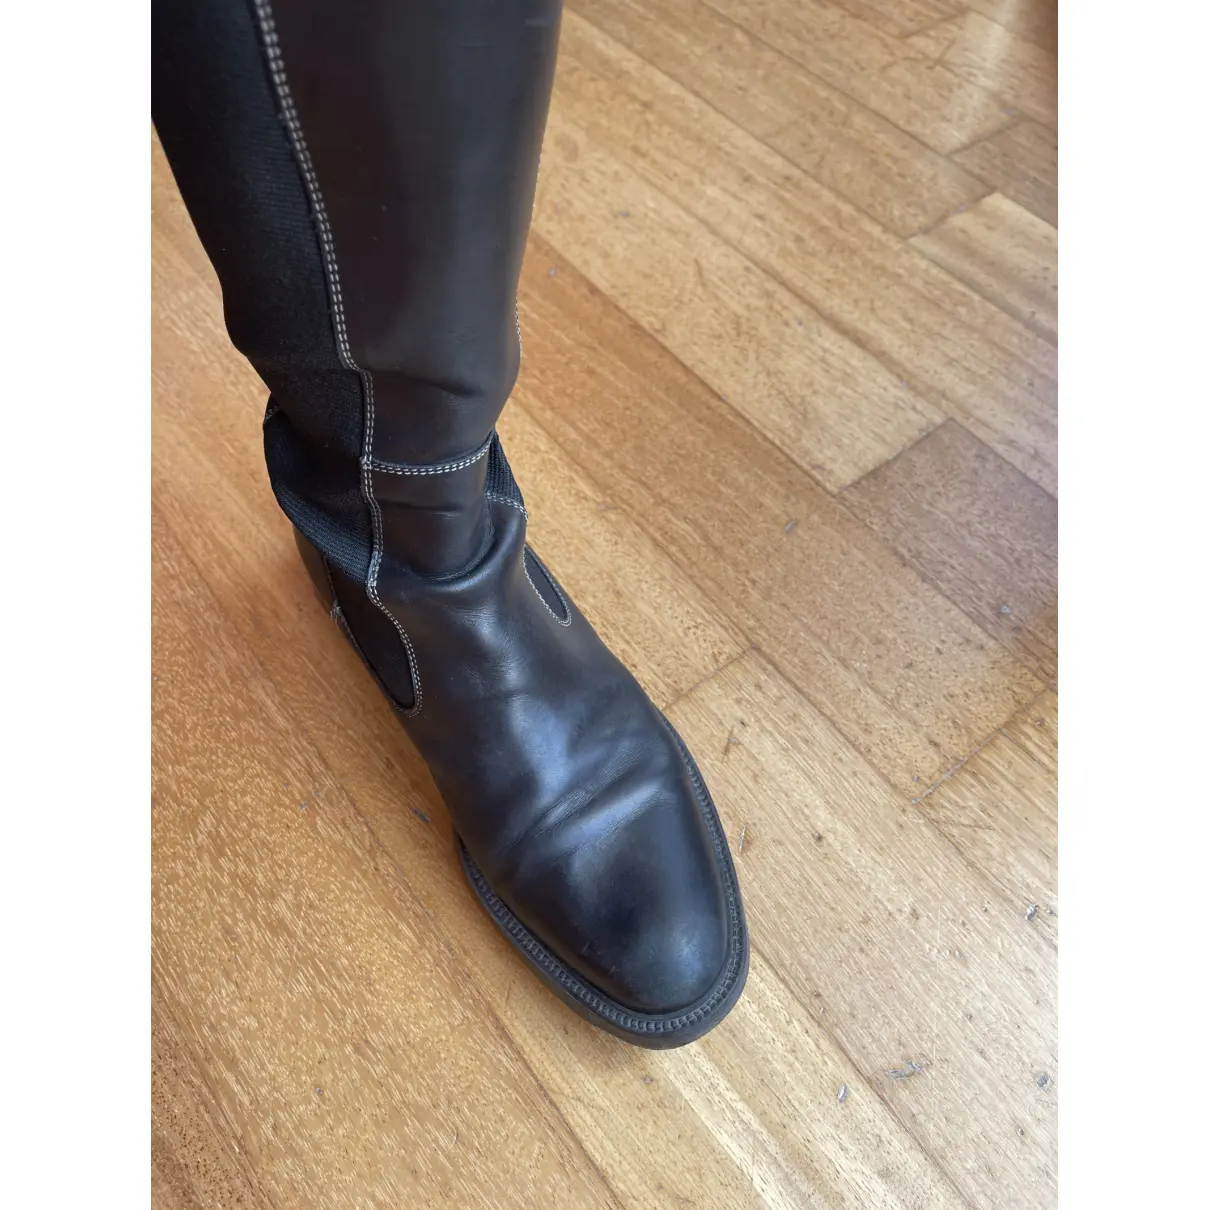 Leather riding boots Santoni